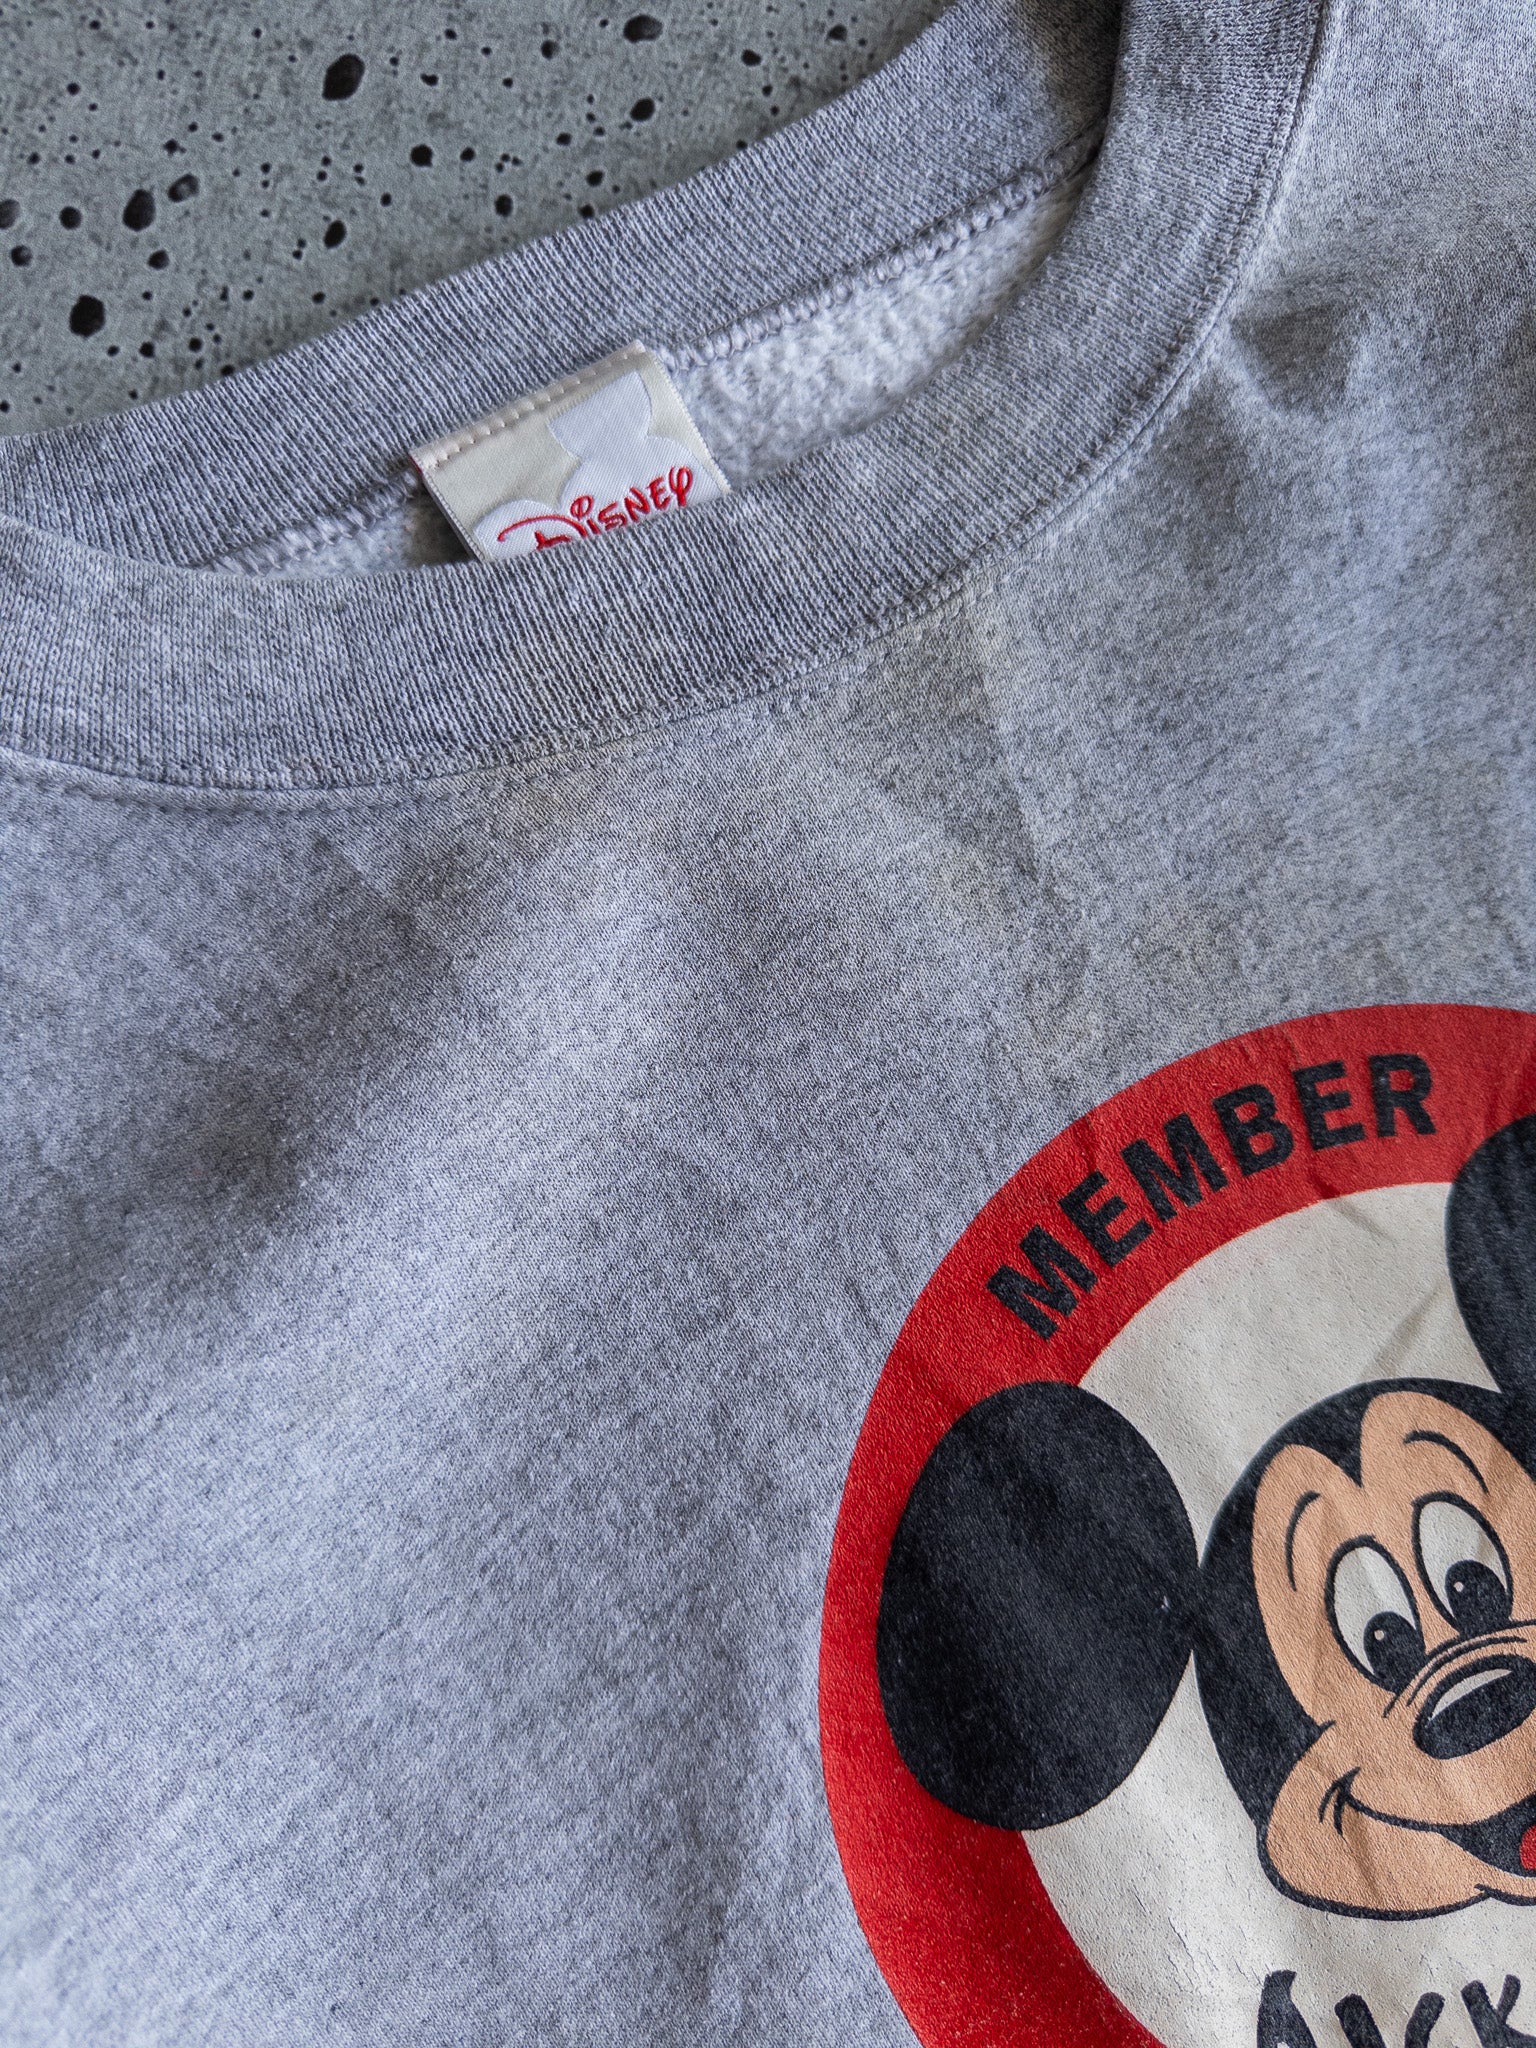 Vintage Mickey Mouse Club Sweatshirt (XXL)